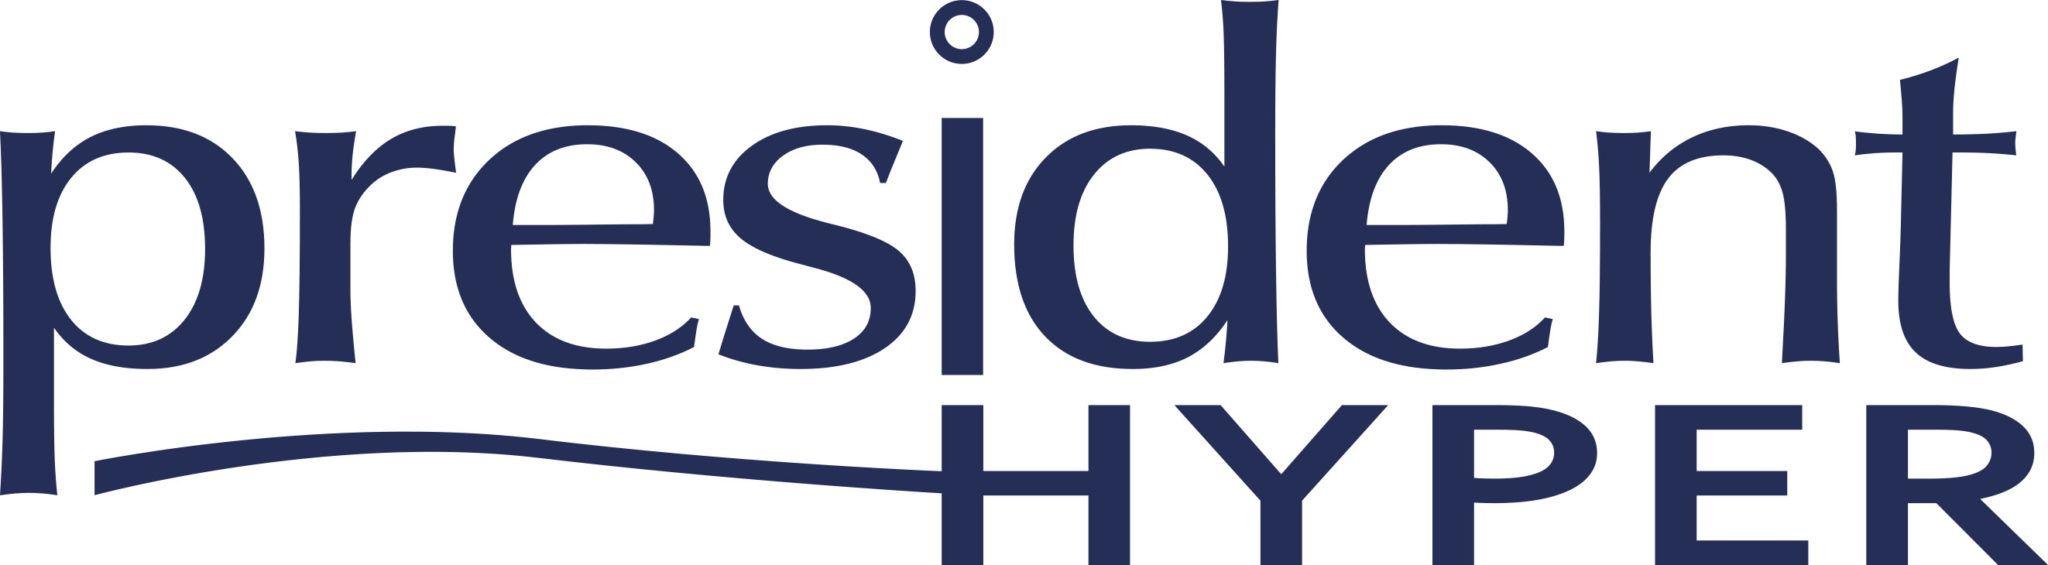 President Logo - President hyper logo no store logo | ARCH Point Of Sale